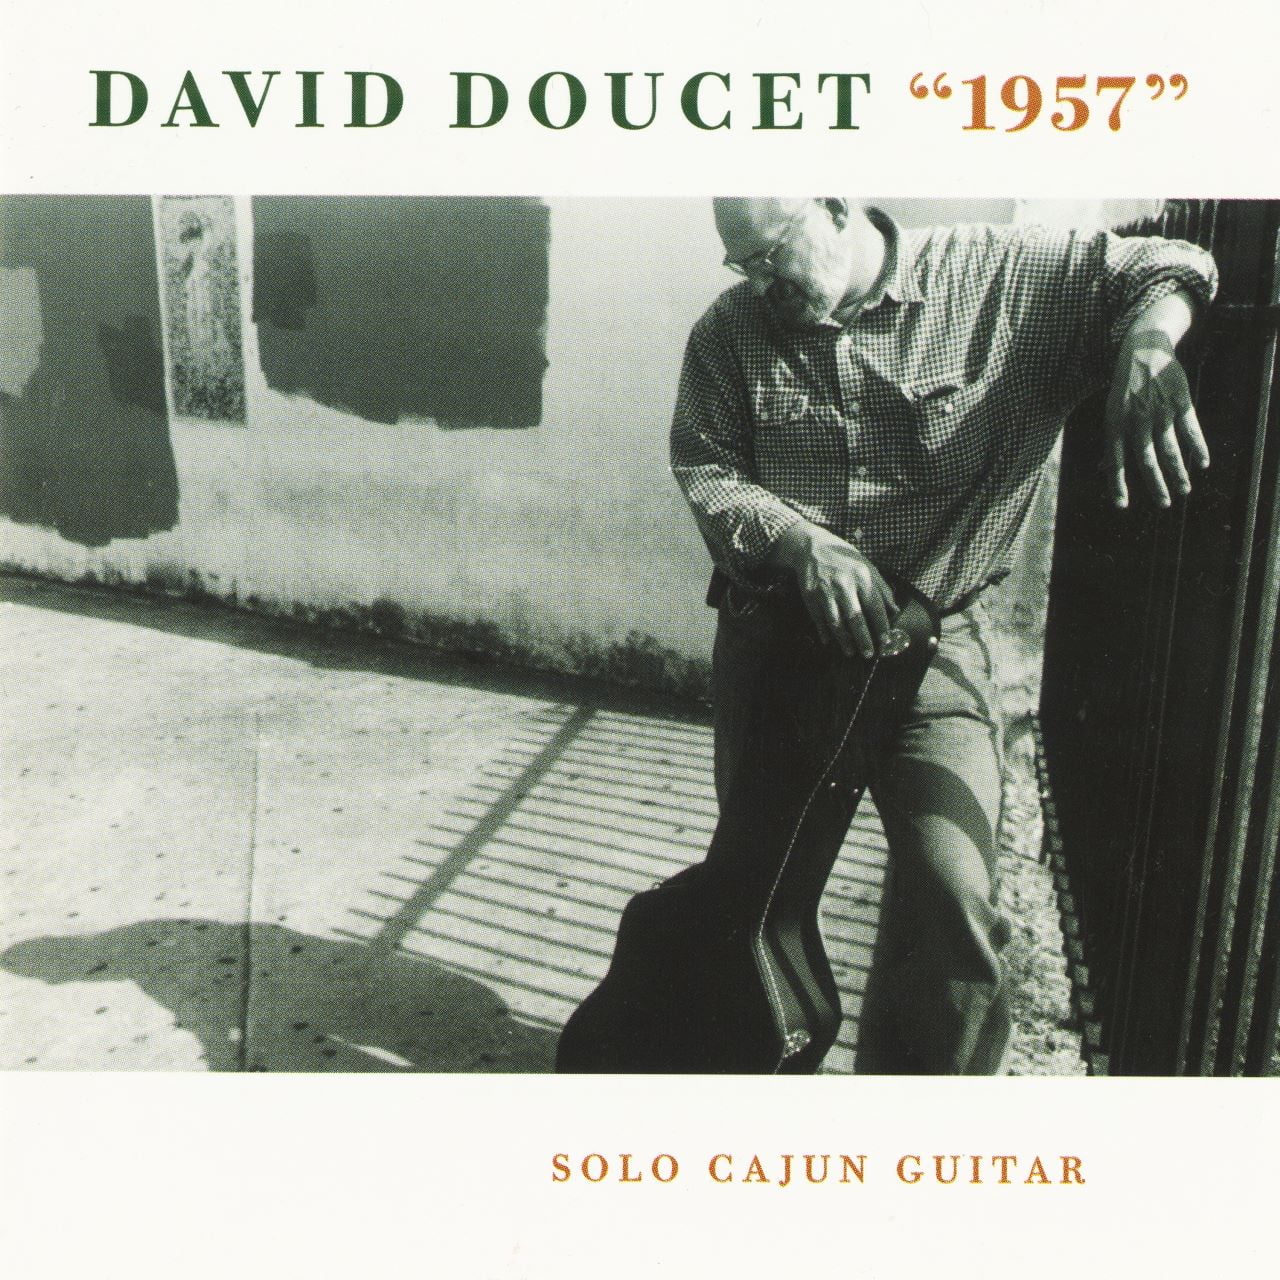 David Doucet - 1957 - Solo Cajun Guitar cover album